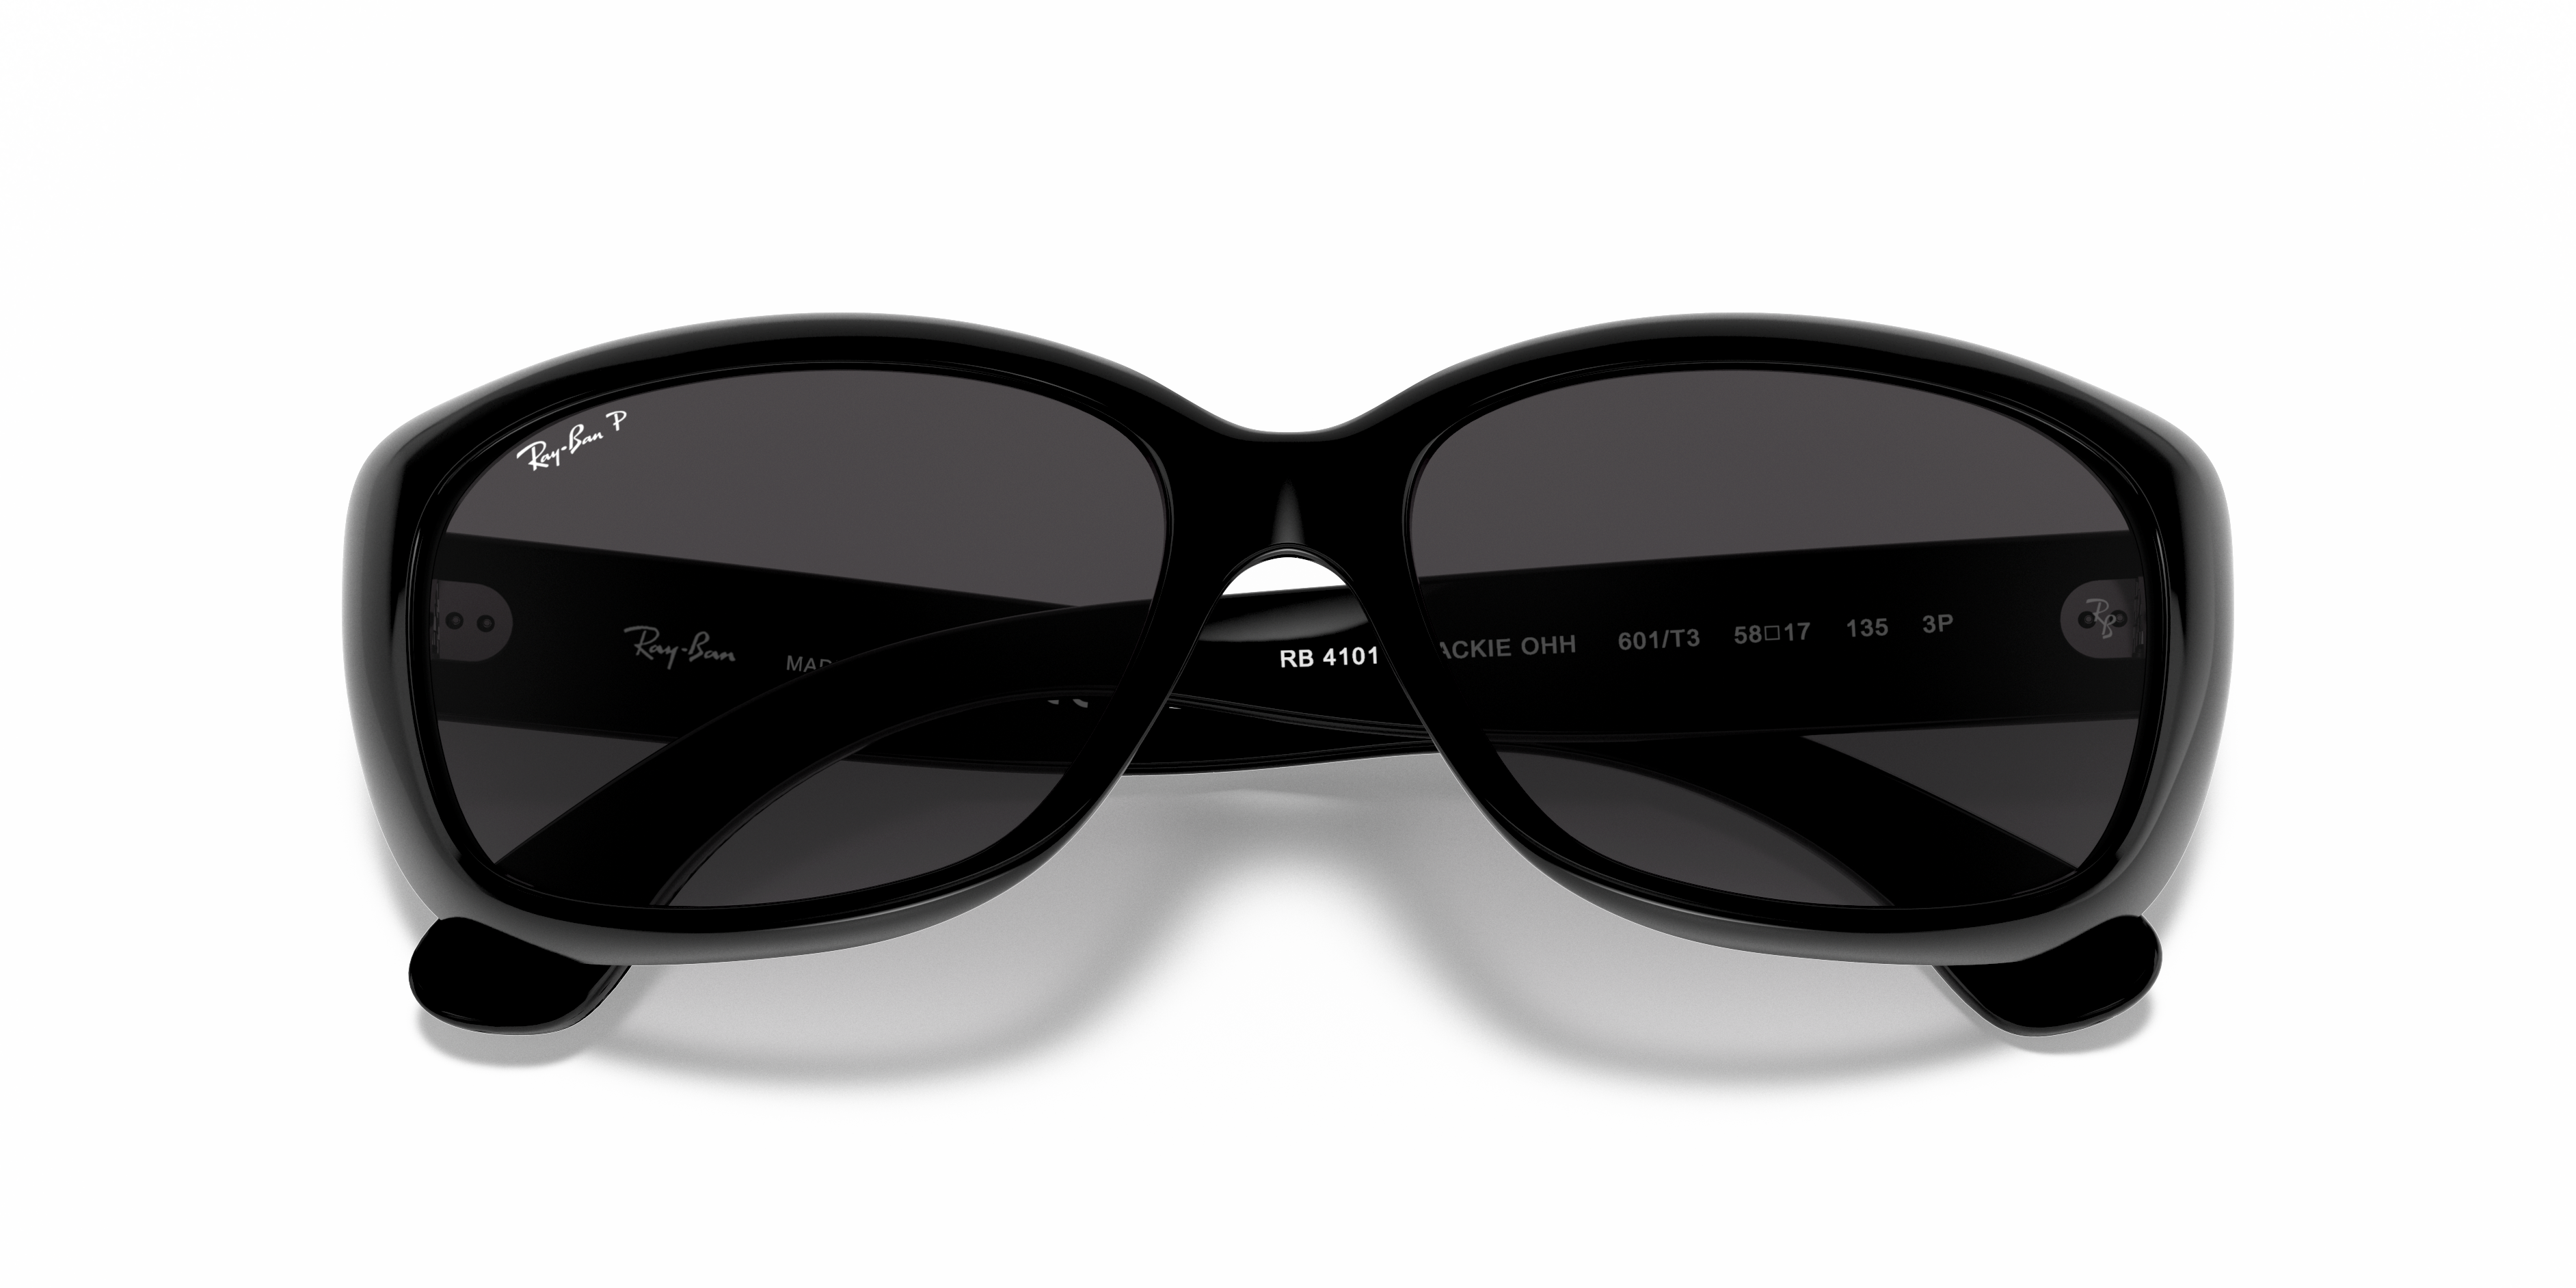 Folded Ray-Ban Jackie Ohh RB 4101 (601/T3) Sunglasses Grey / Black